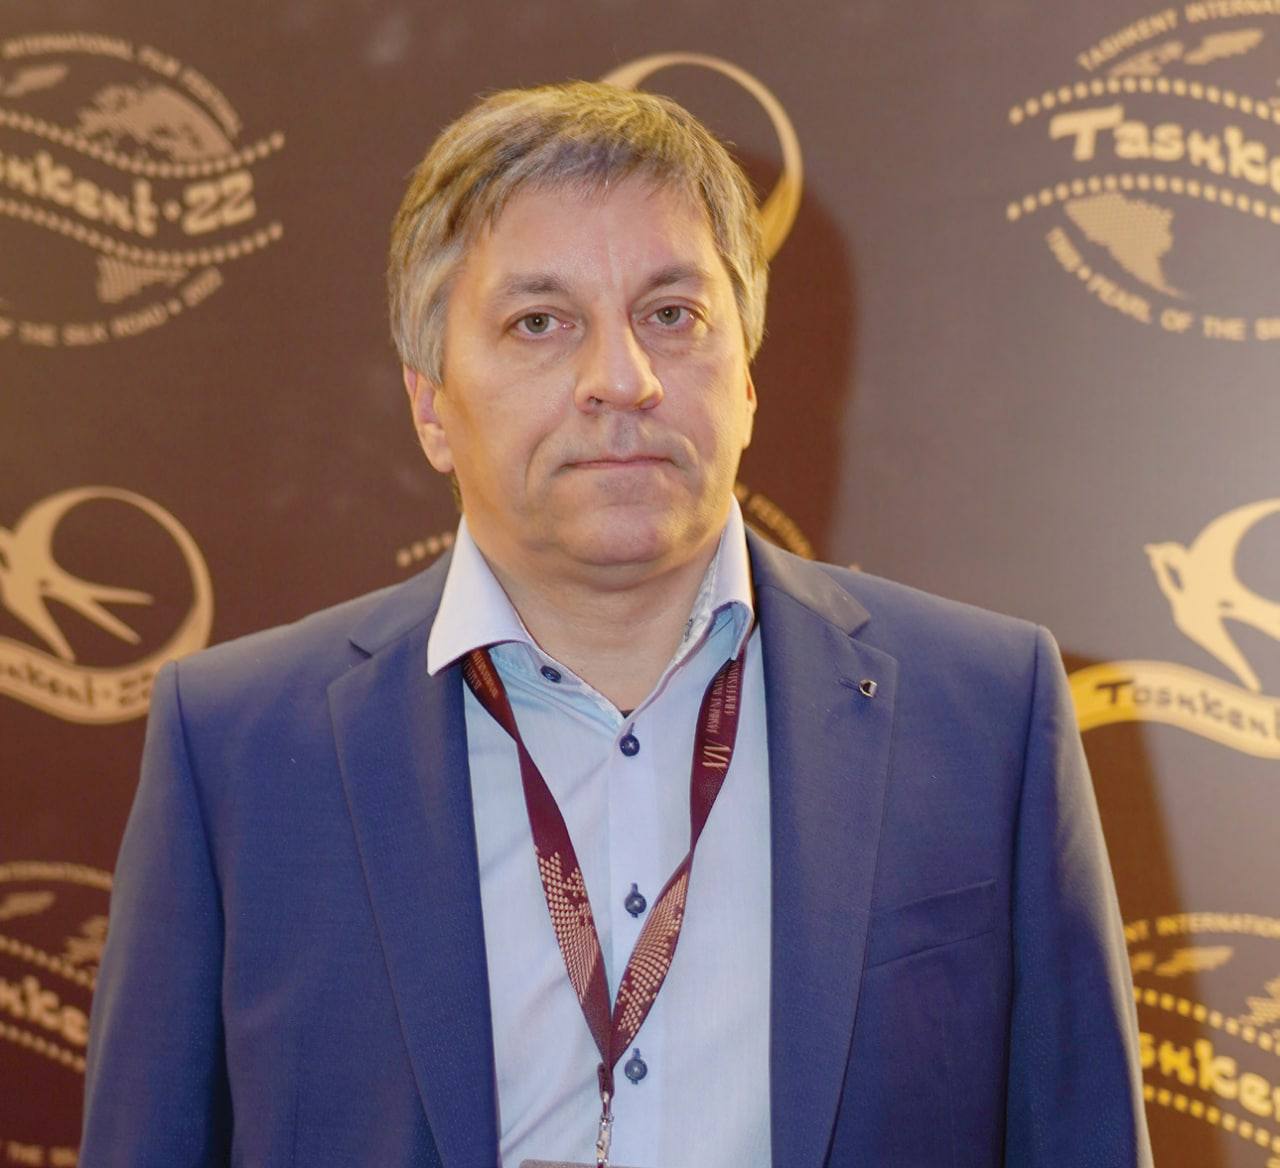 Alexey Telnov, director of the Lendok film studio